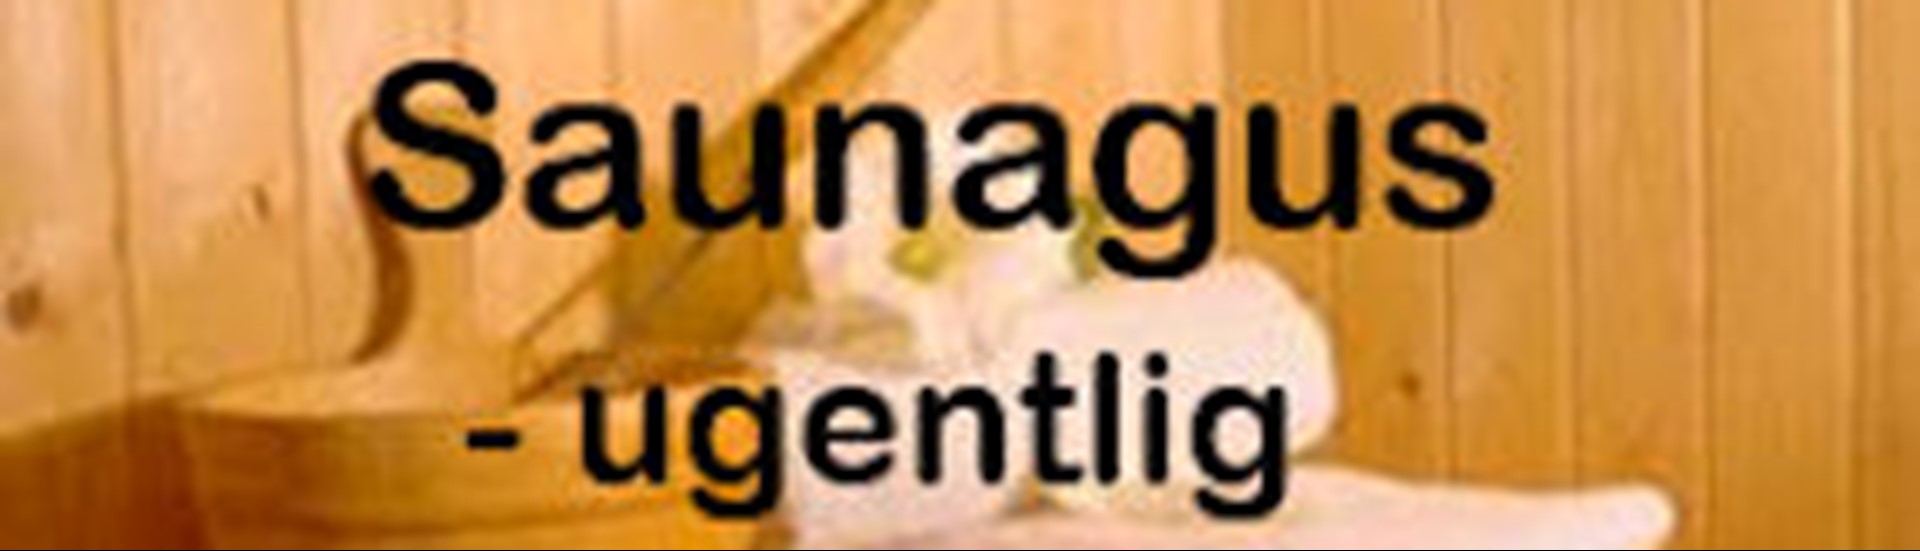 Saunagus banner2.jpg